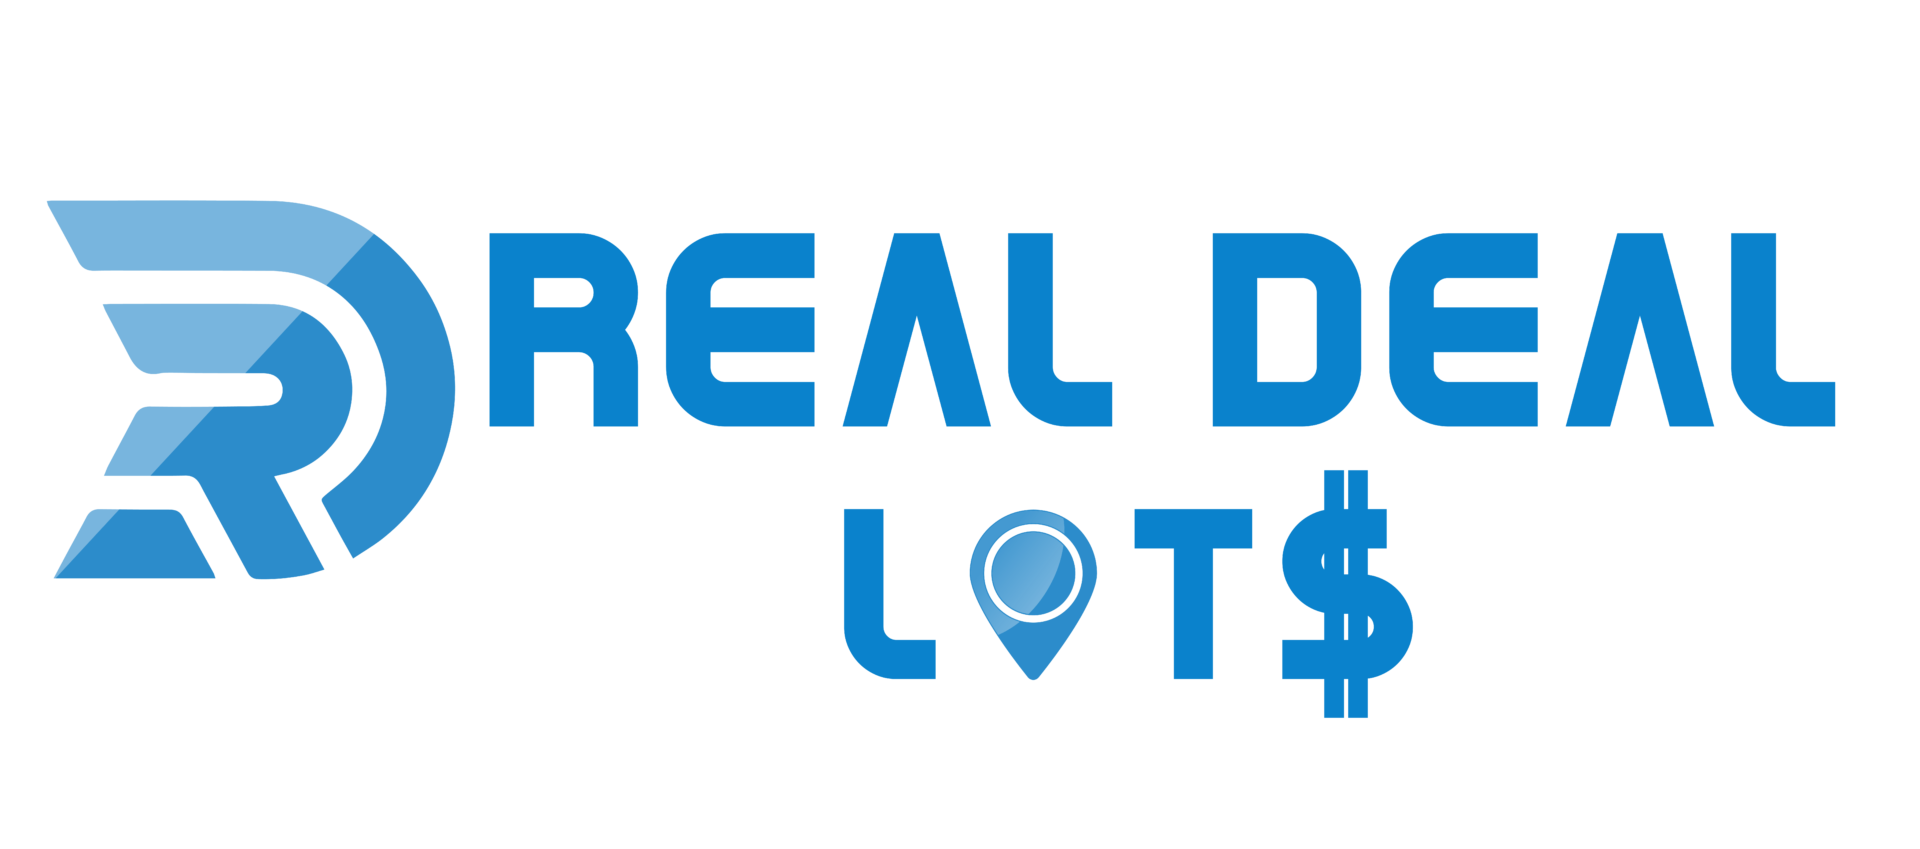 Real Deal Lots logo